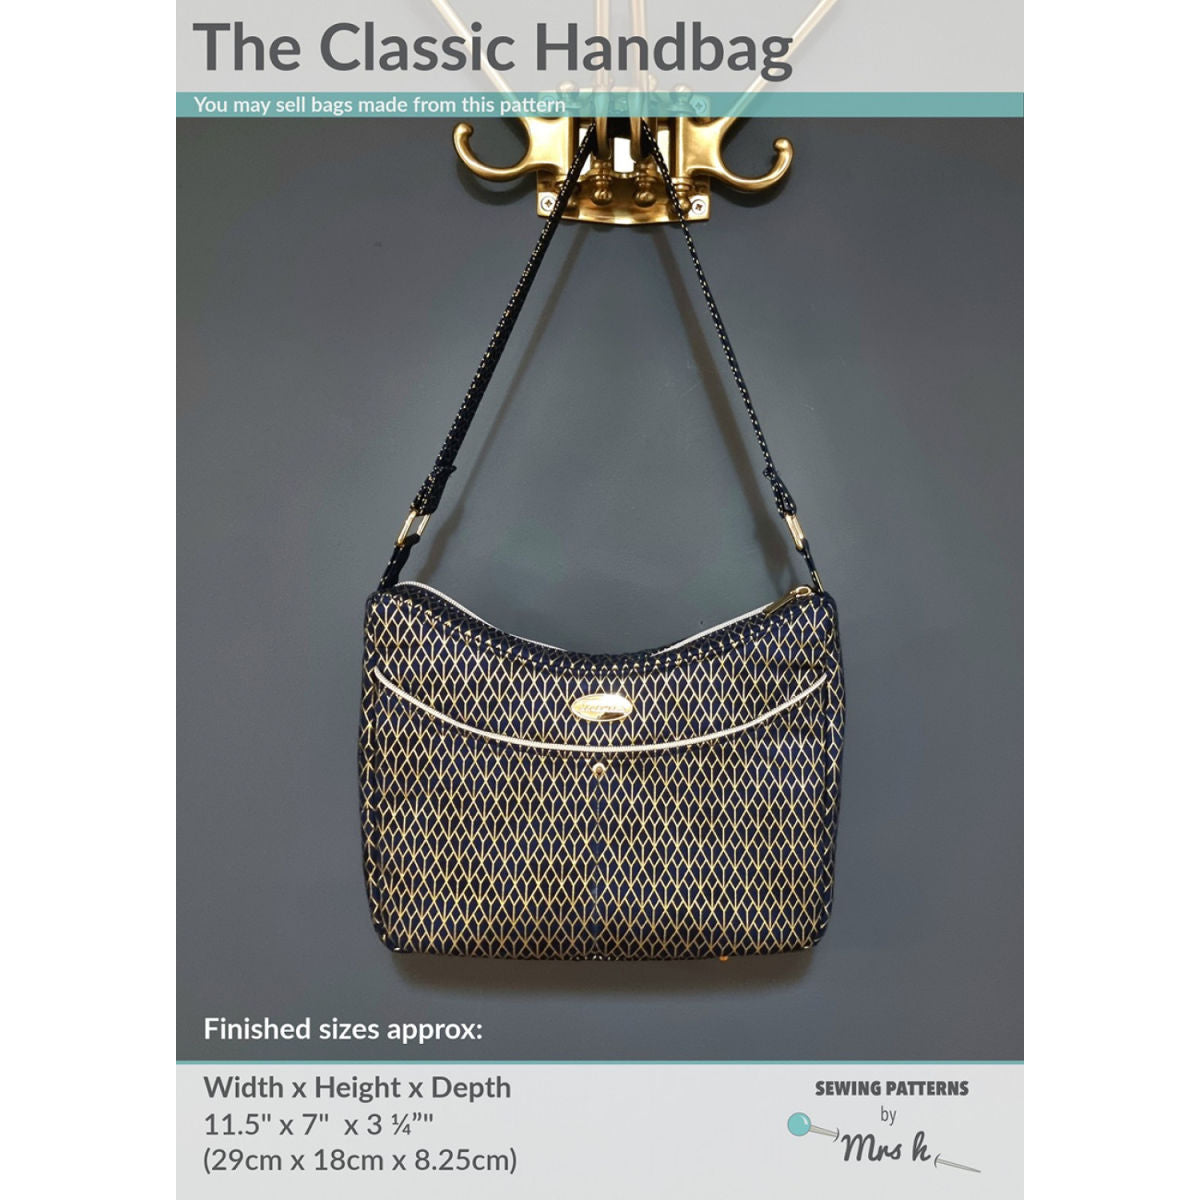 Classic Handbag pattern by Mrs H